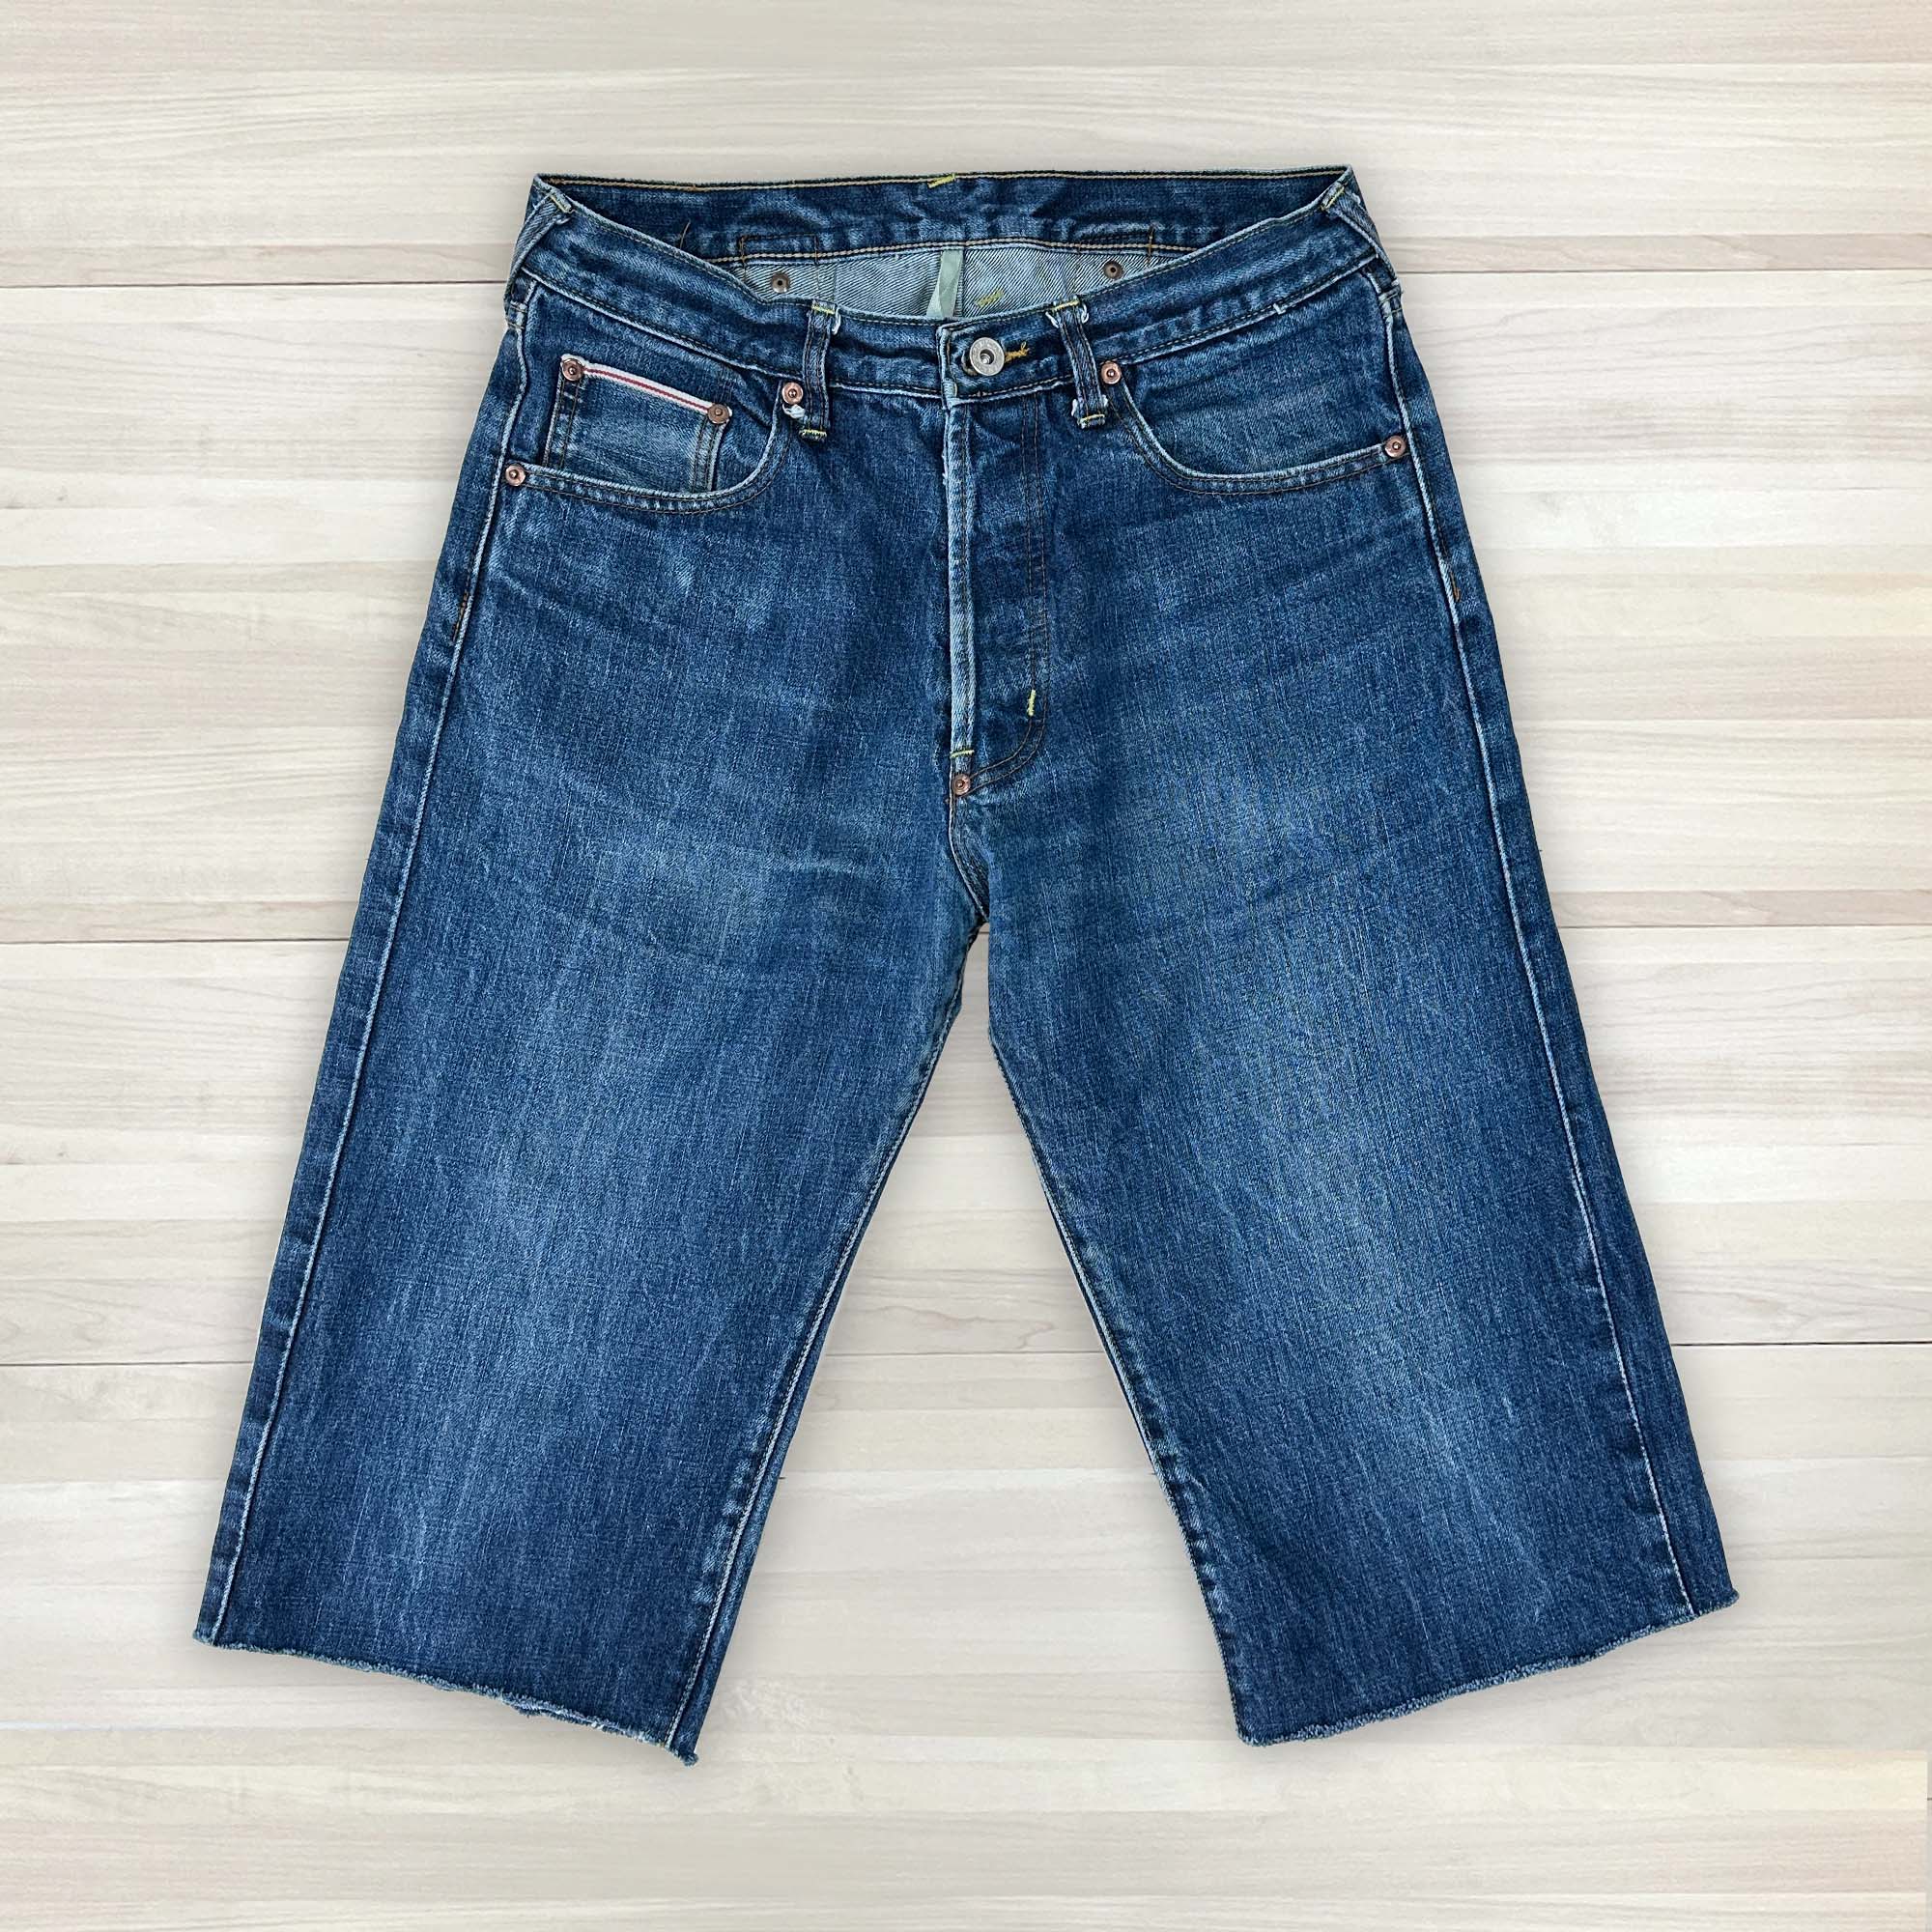 Men's Blue Vintage Evisu Cutoff Selvedge Denim Shorts - 30x16-1